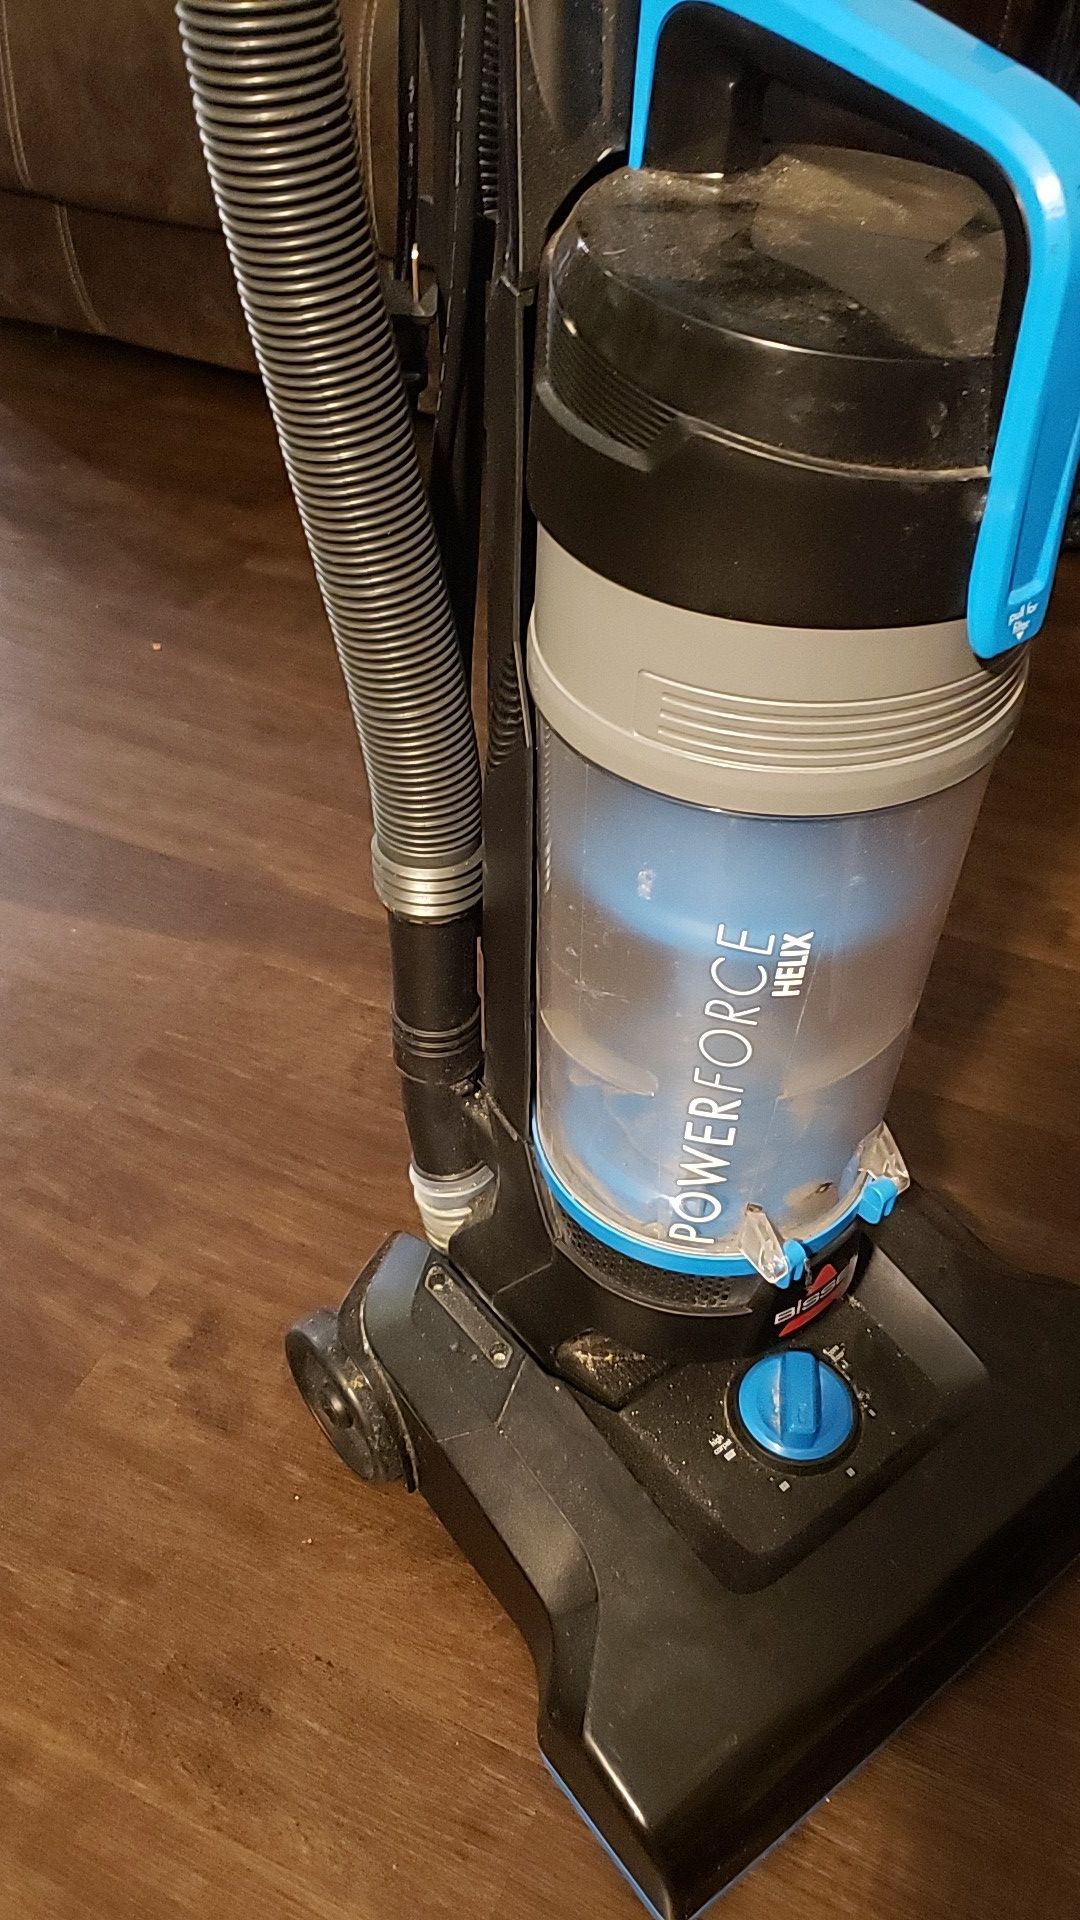 Bisell vacuum cleaner